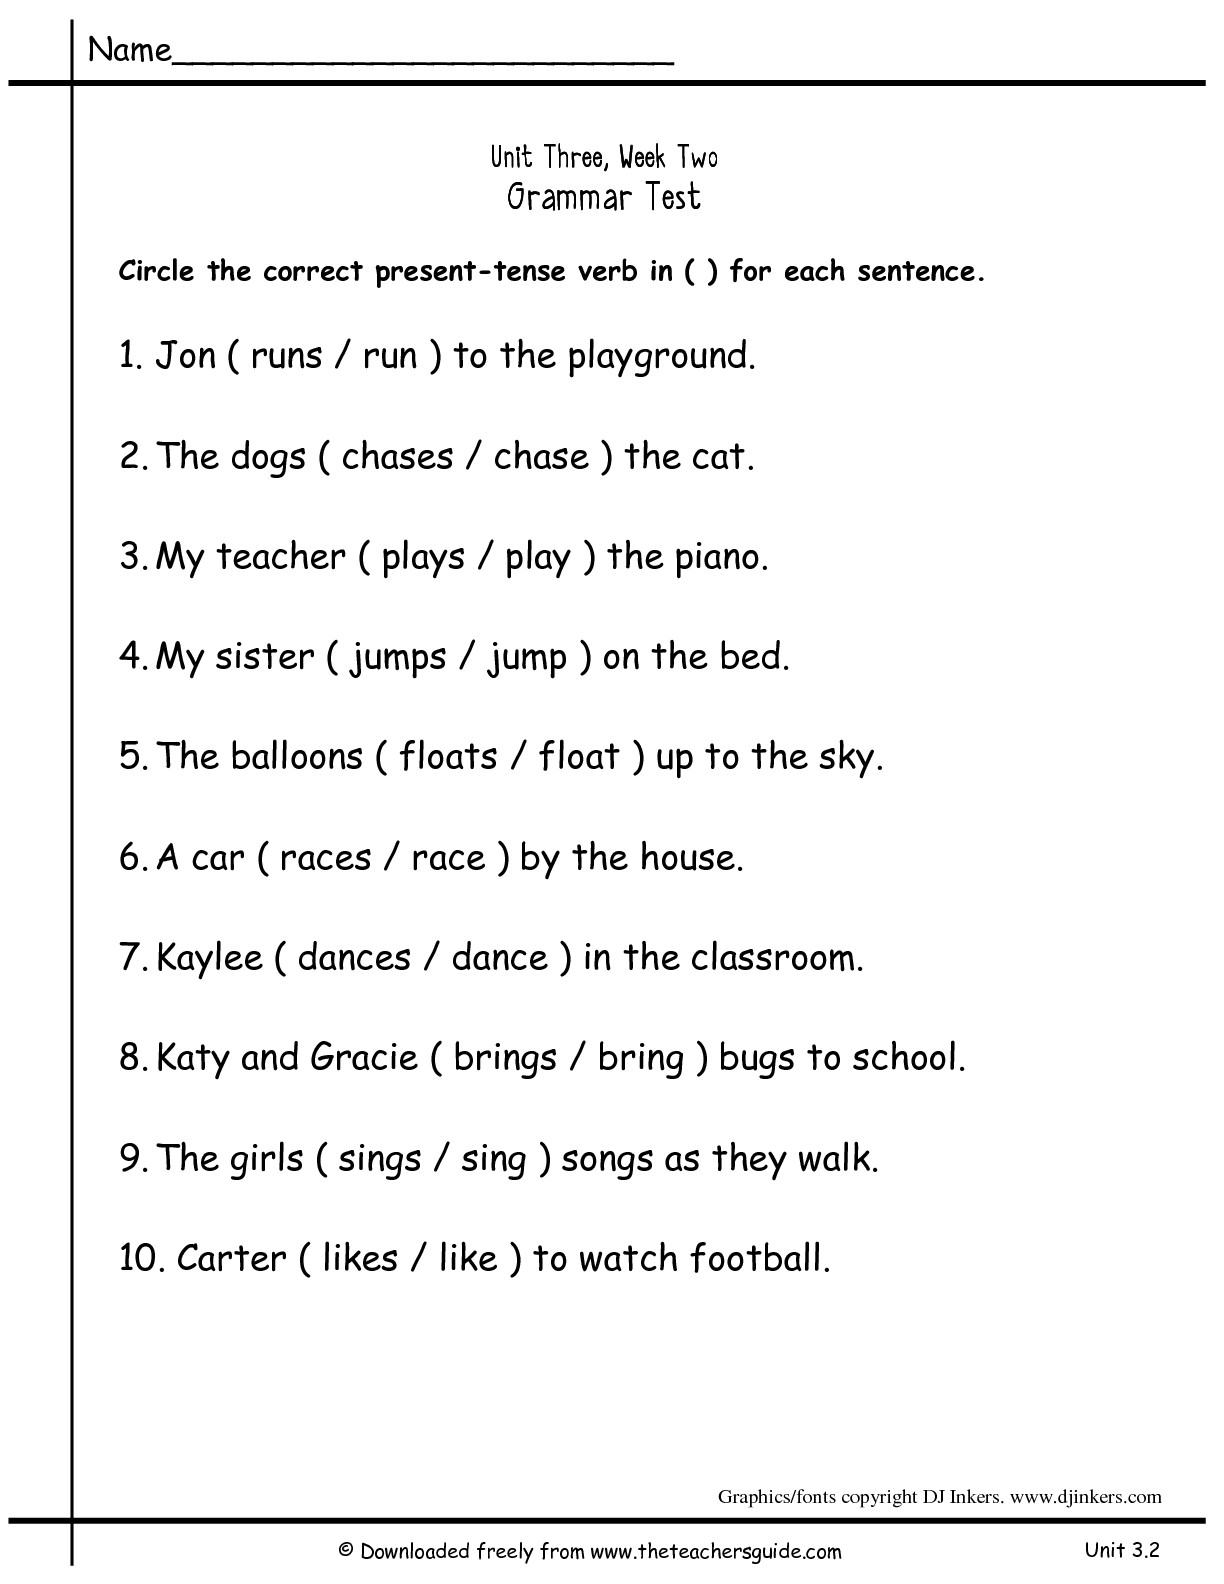 Verb Tenses Worksheets 2nd Grade Tests Image